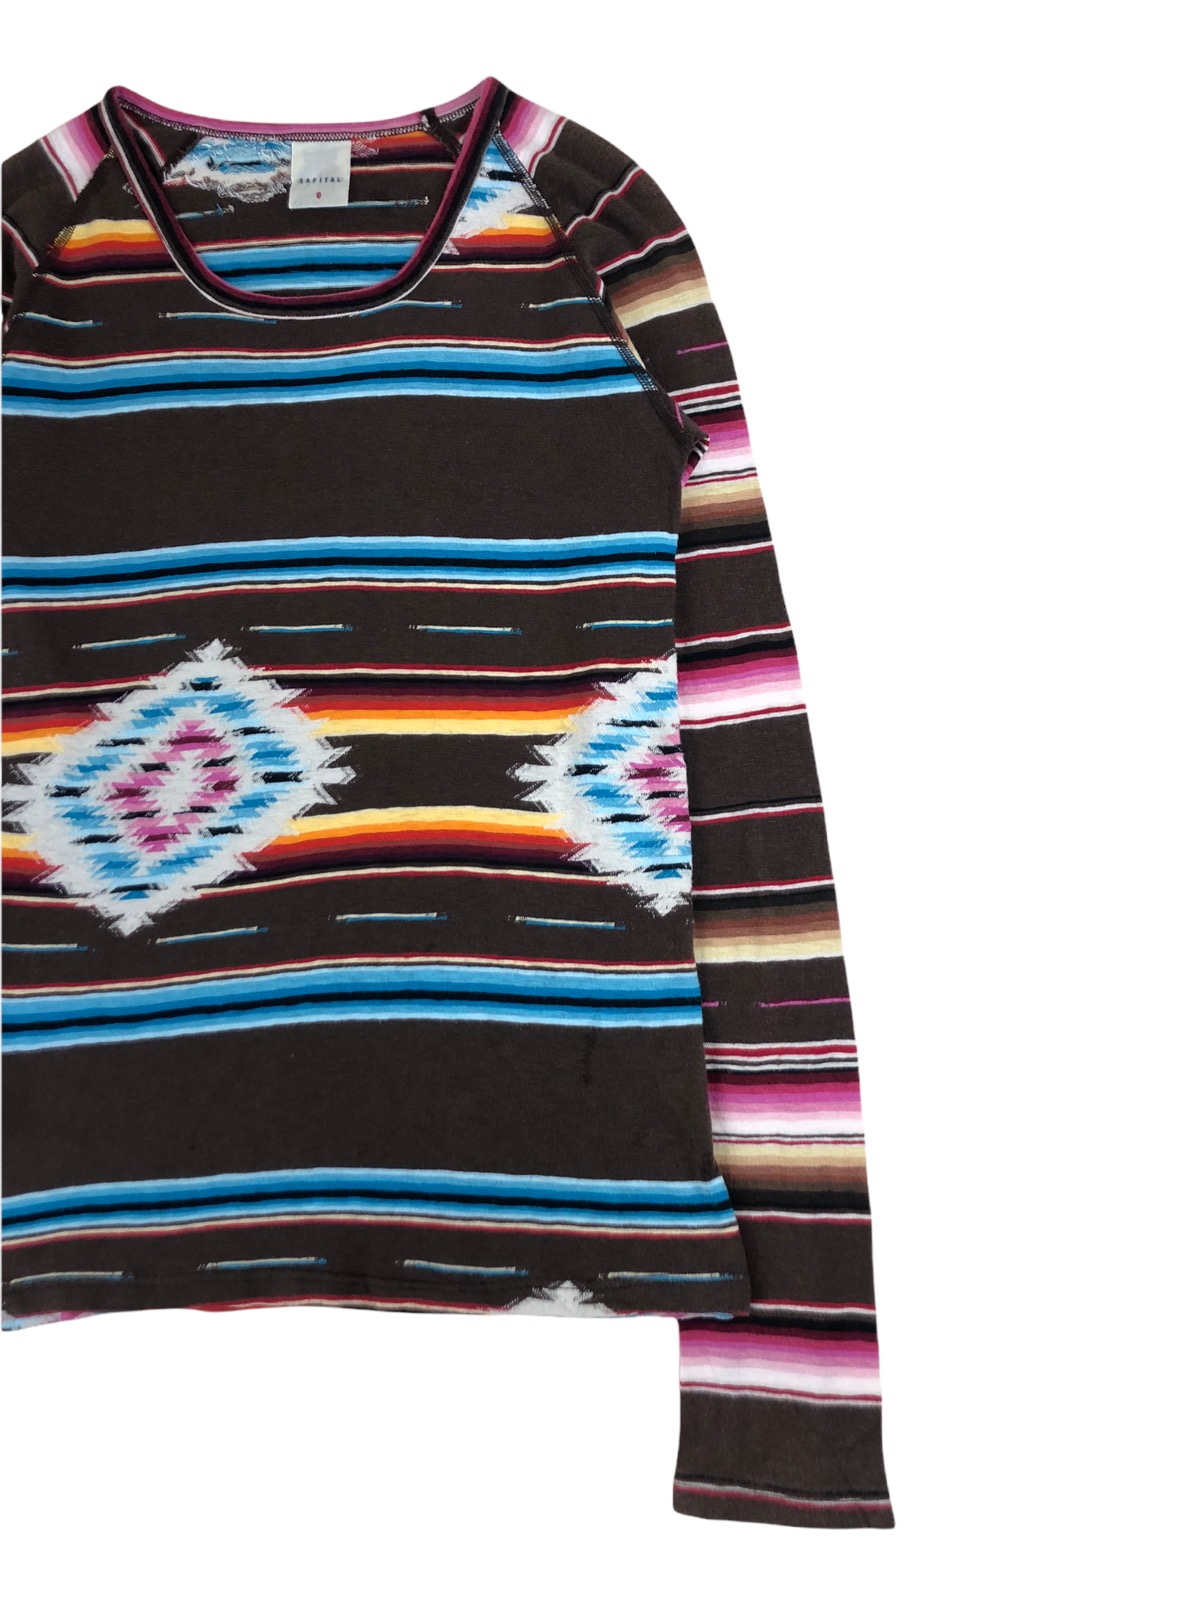 Vintage Kapital Aztec motif Cotton Knit Tshirt - 2